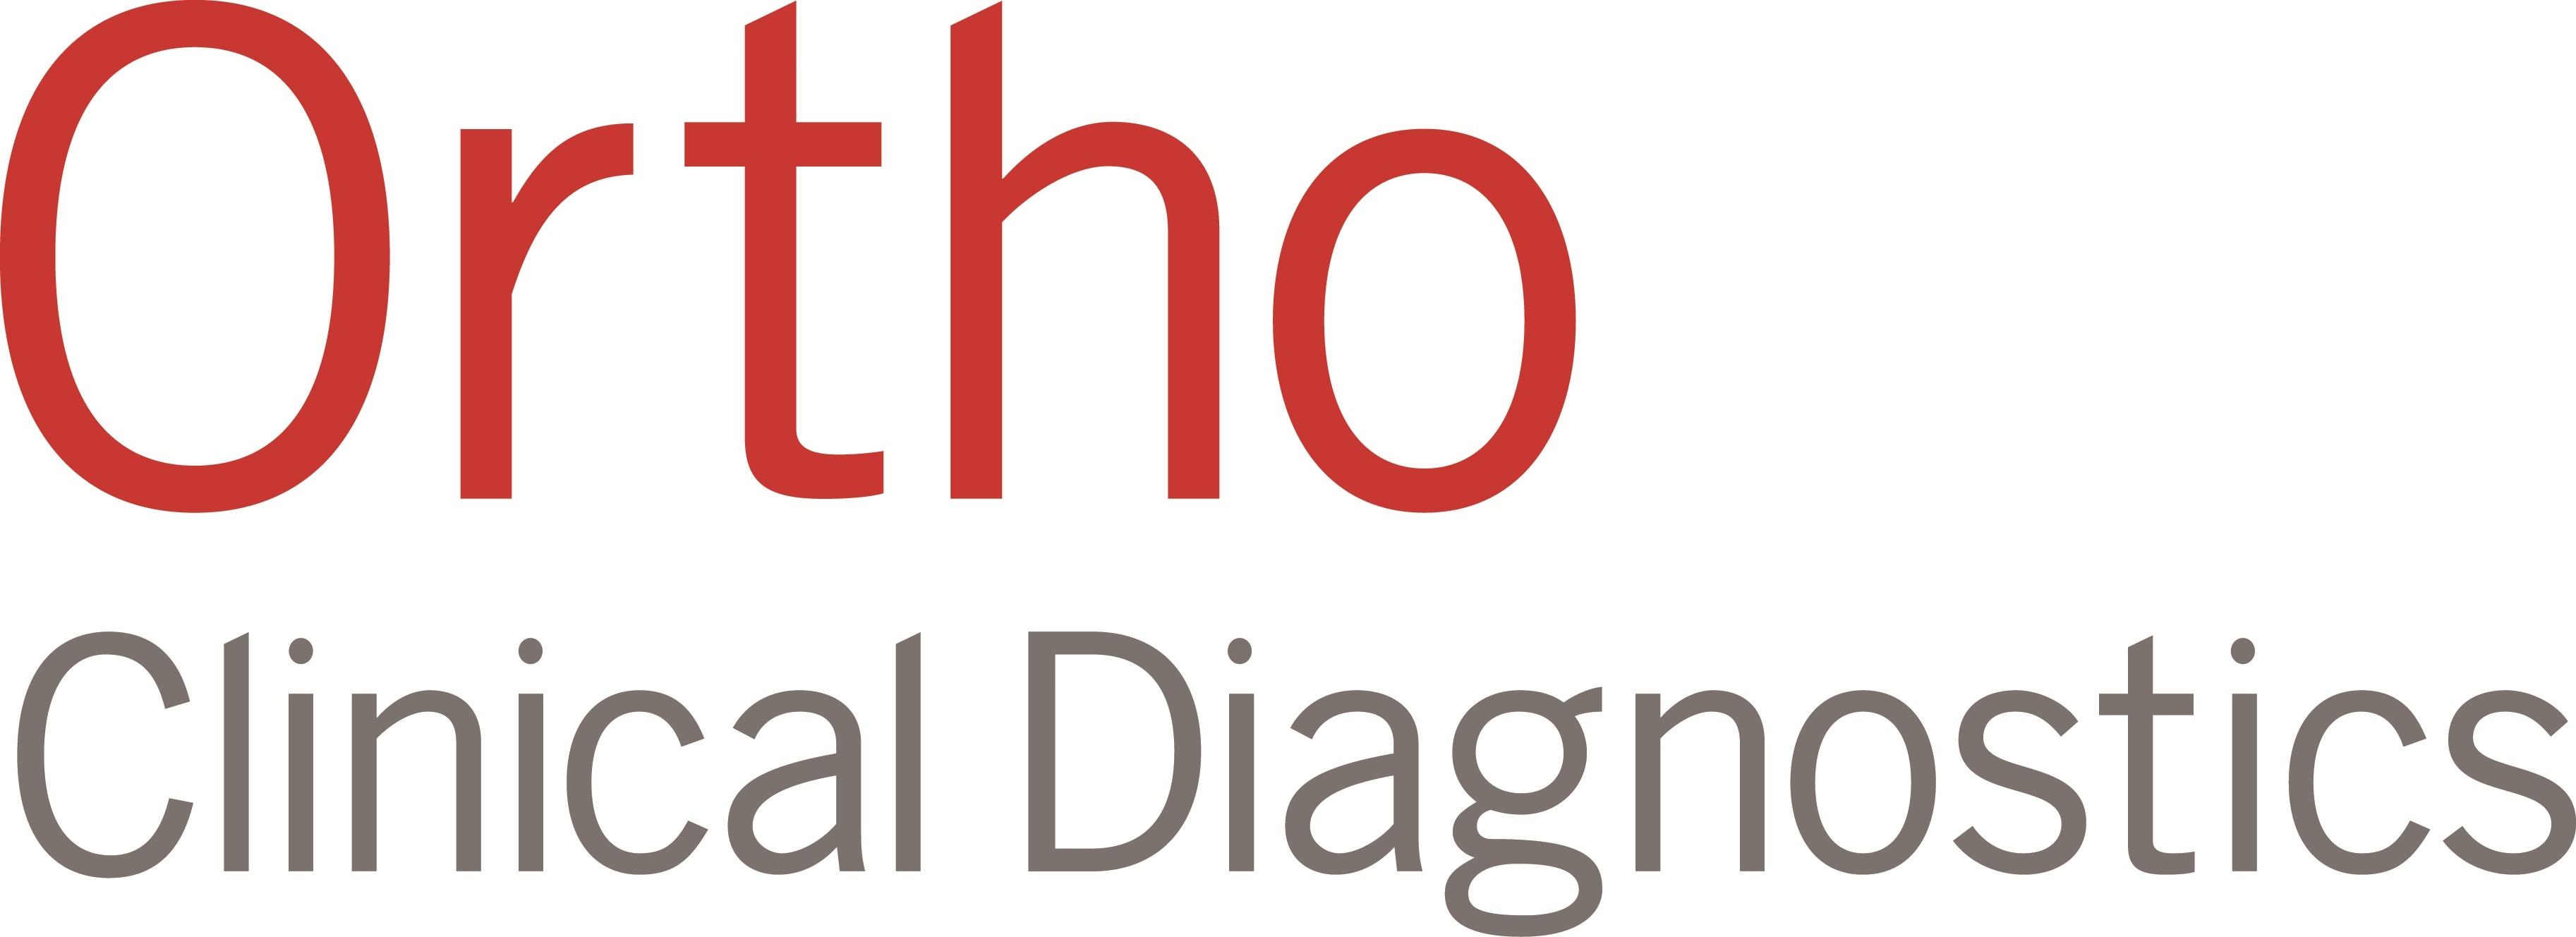 Ortho-Clinical Diagnostics, Inc. : Quotes, Address, Contact